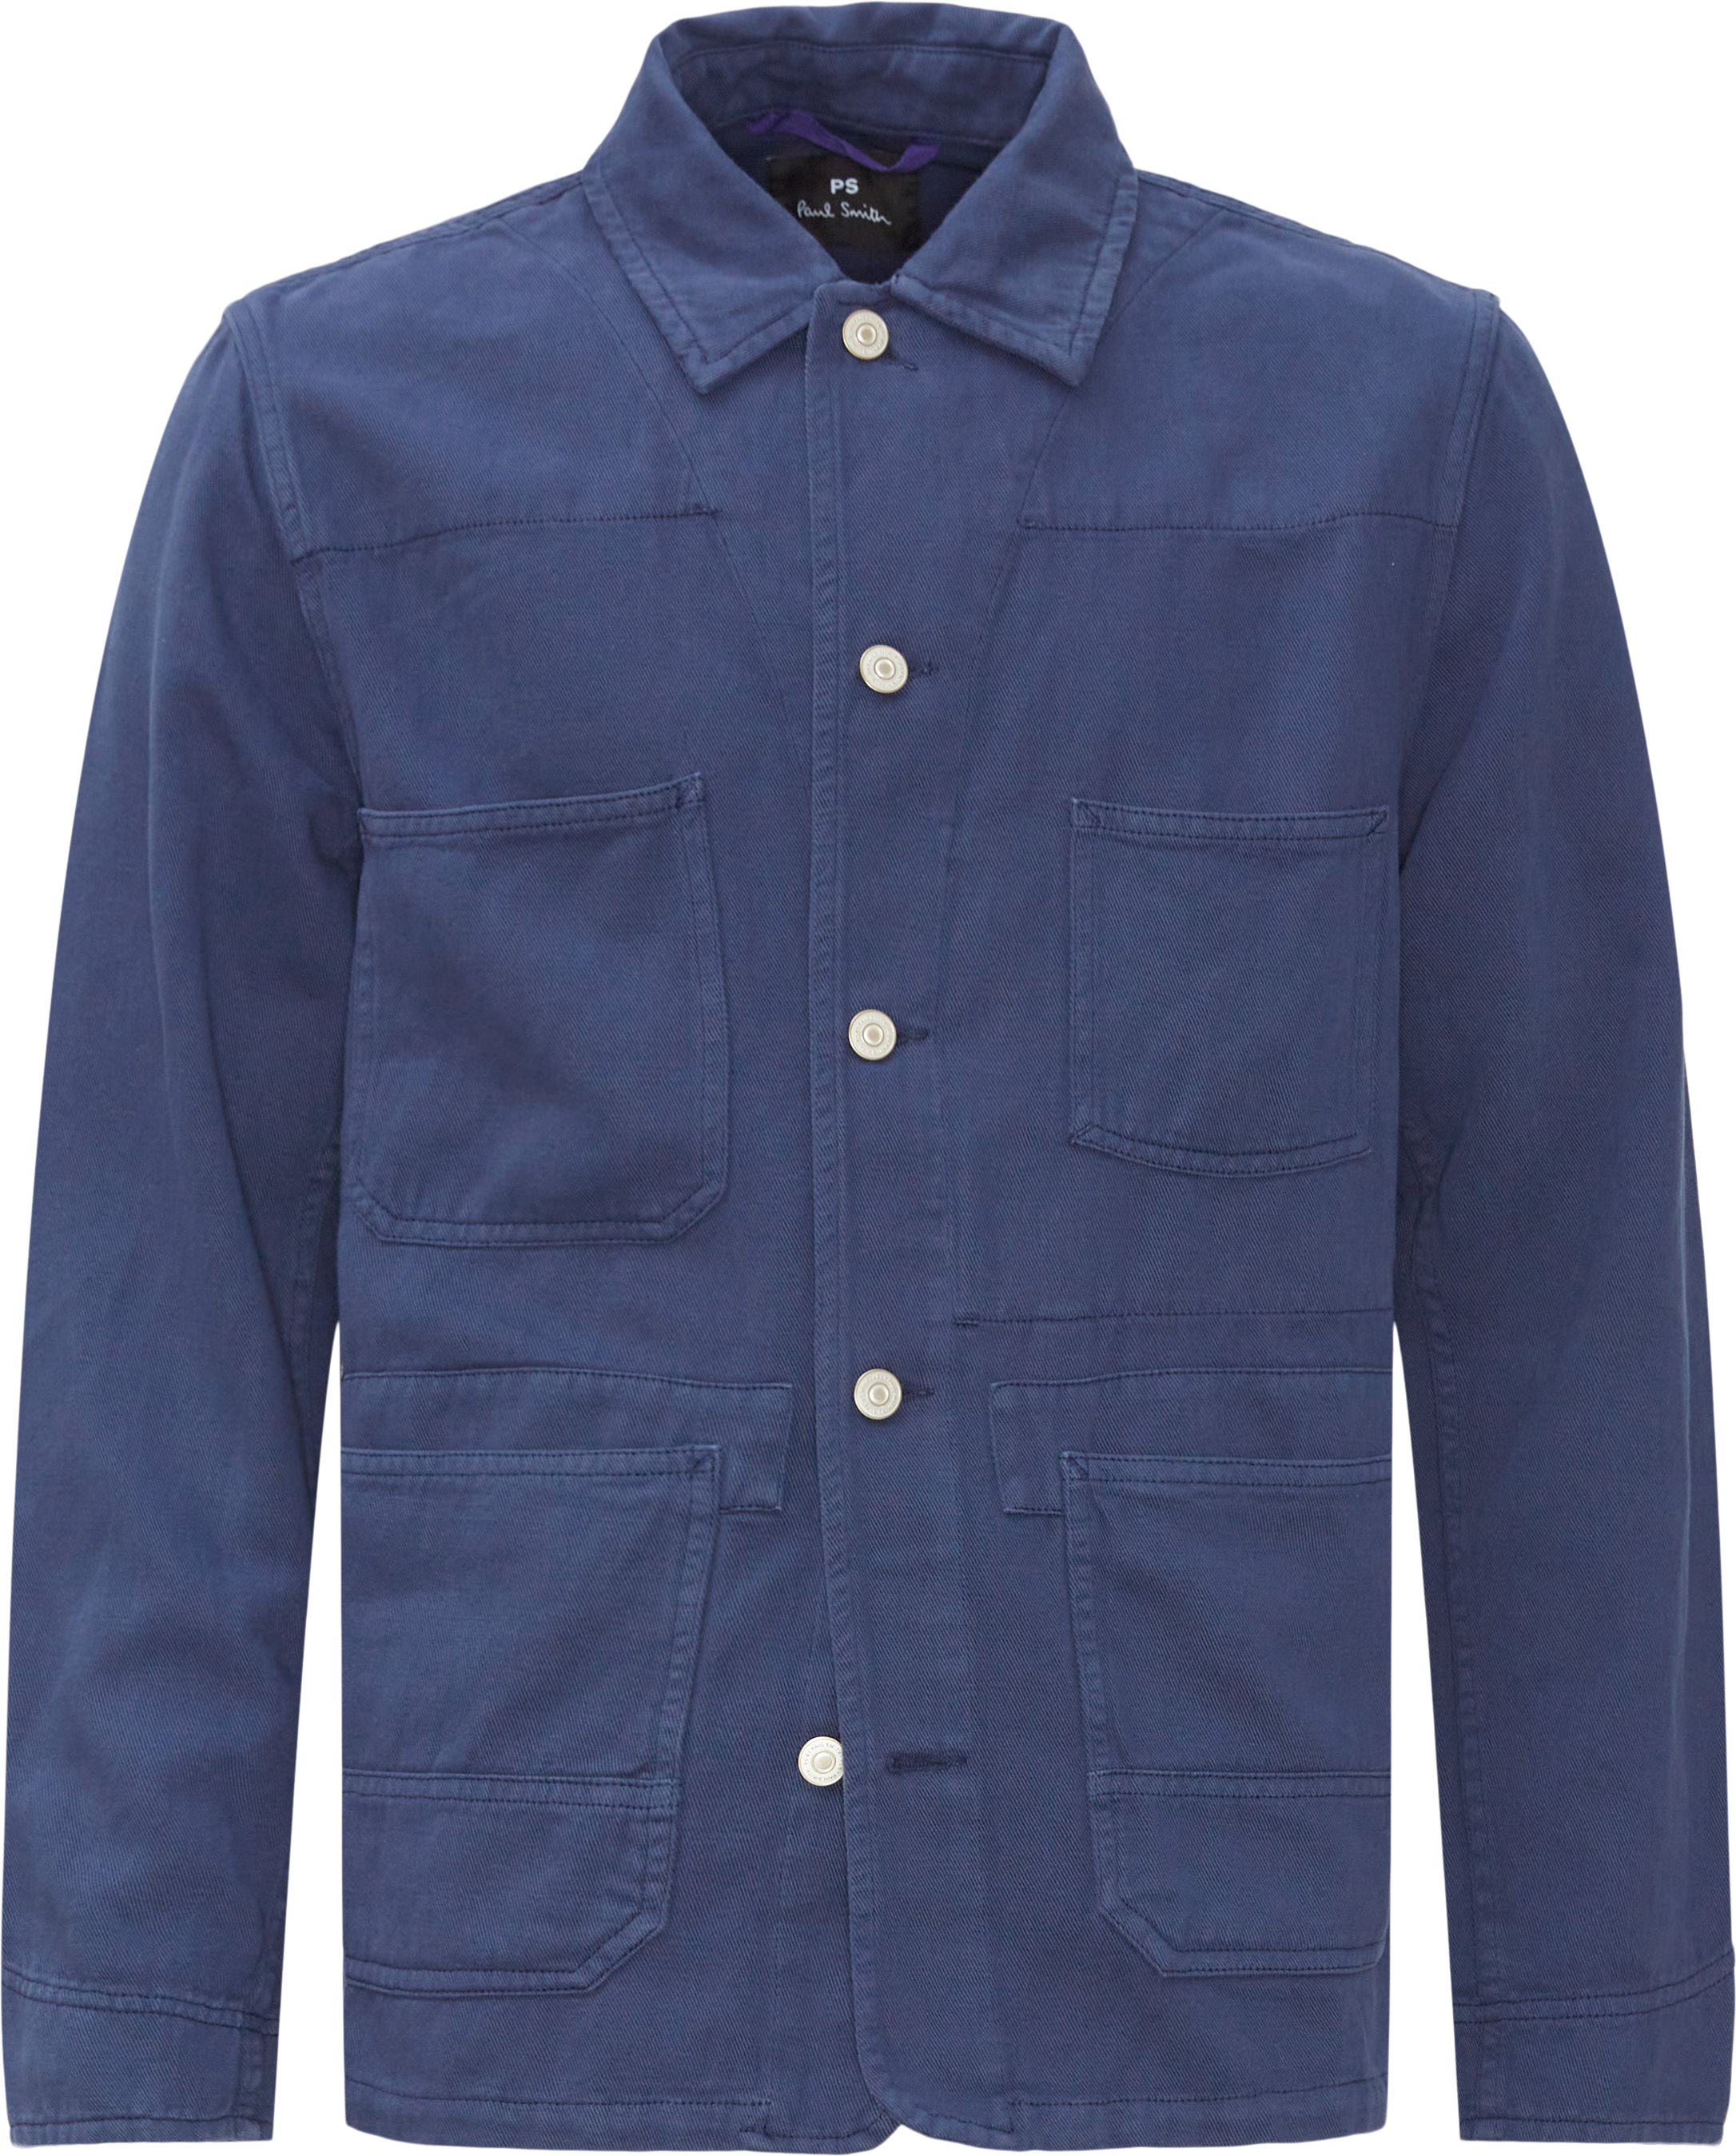 Jackets - Regular fit - Blue